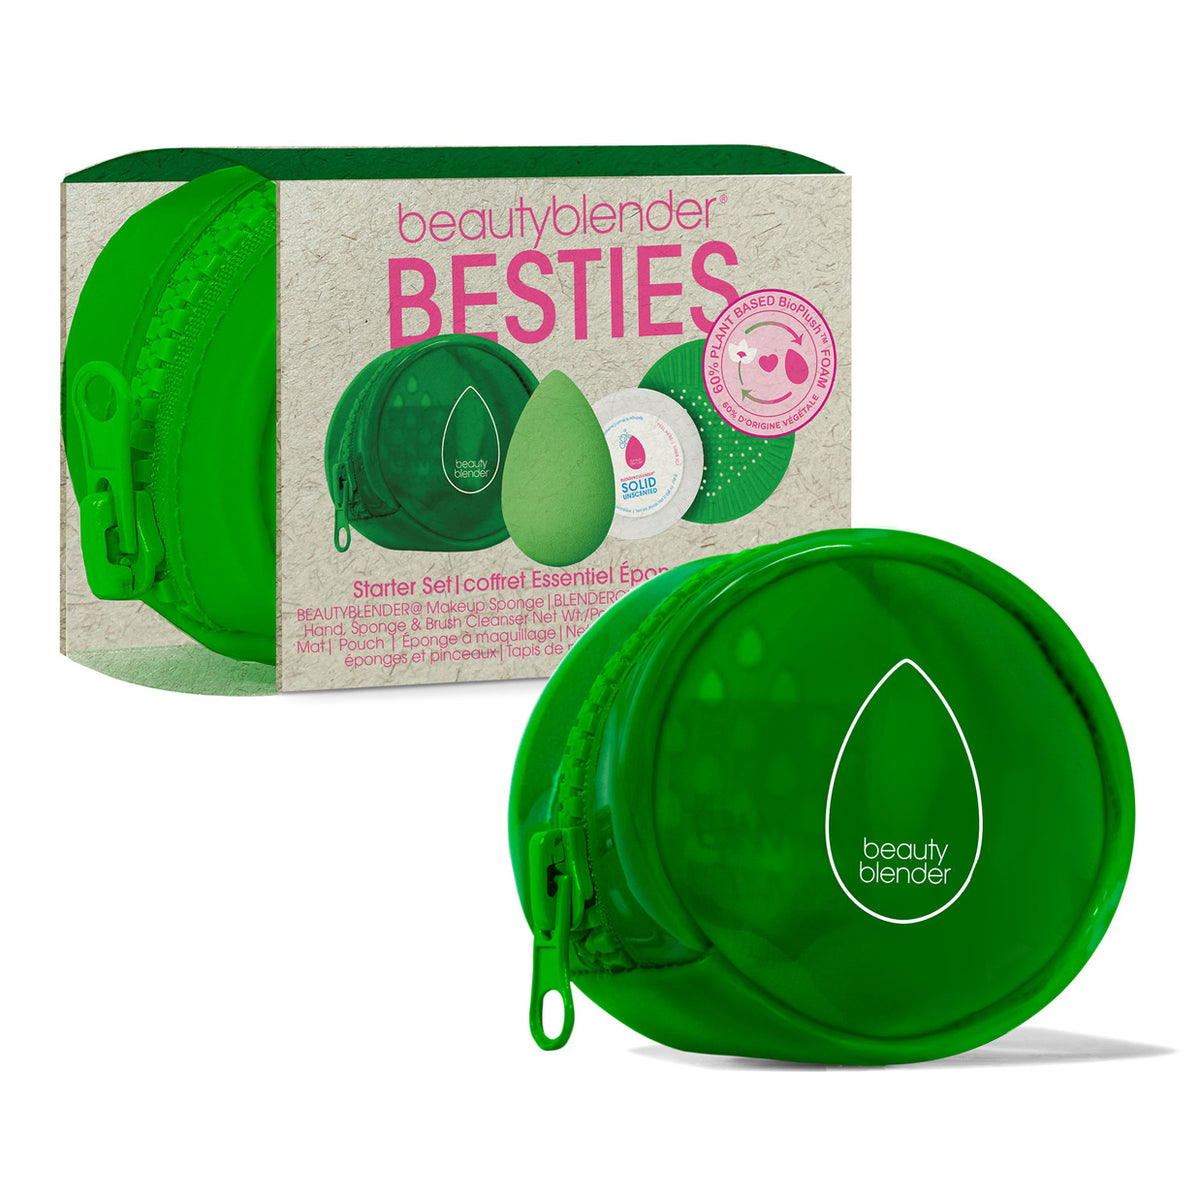 Besties Bio Pure Blend & Cleanse 4-Piece Starter Set.